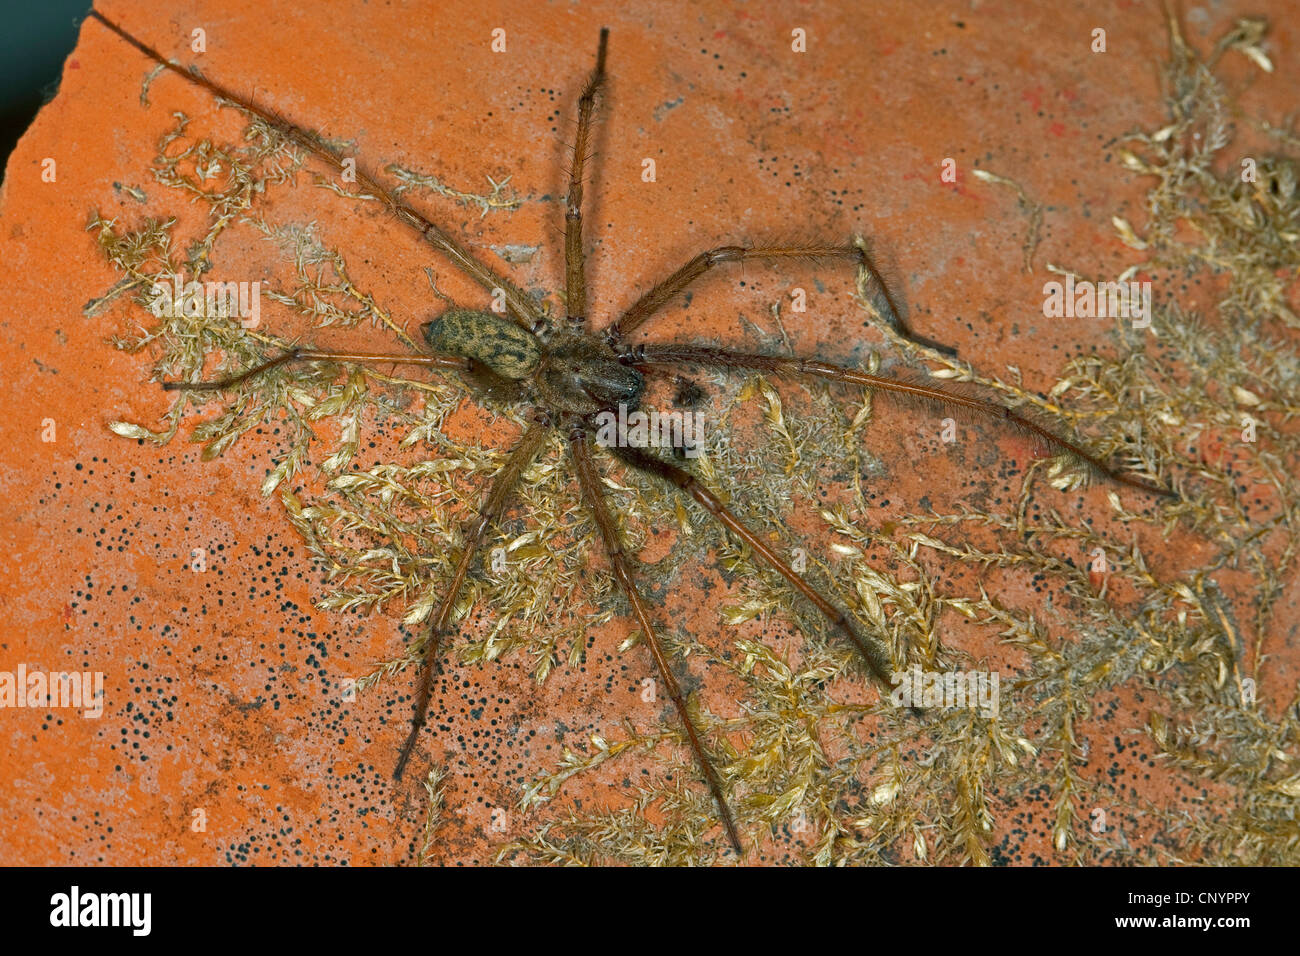 giant European house spider, giant house spider, larger house spider, cobweb spider (Tegenaria gigantea, Tegenaria atrica), male, Germany Stock Photo